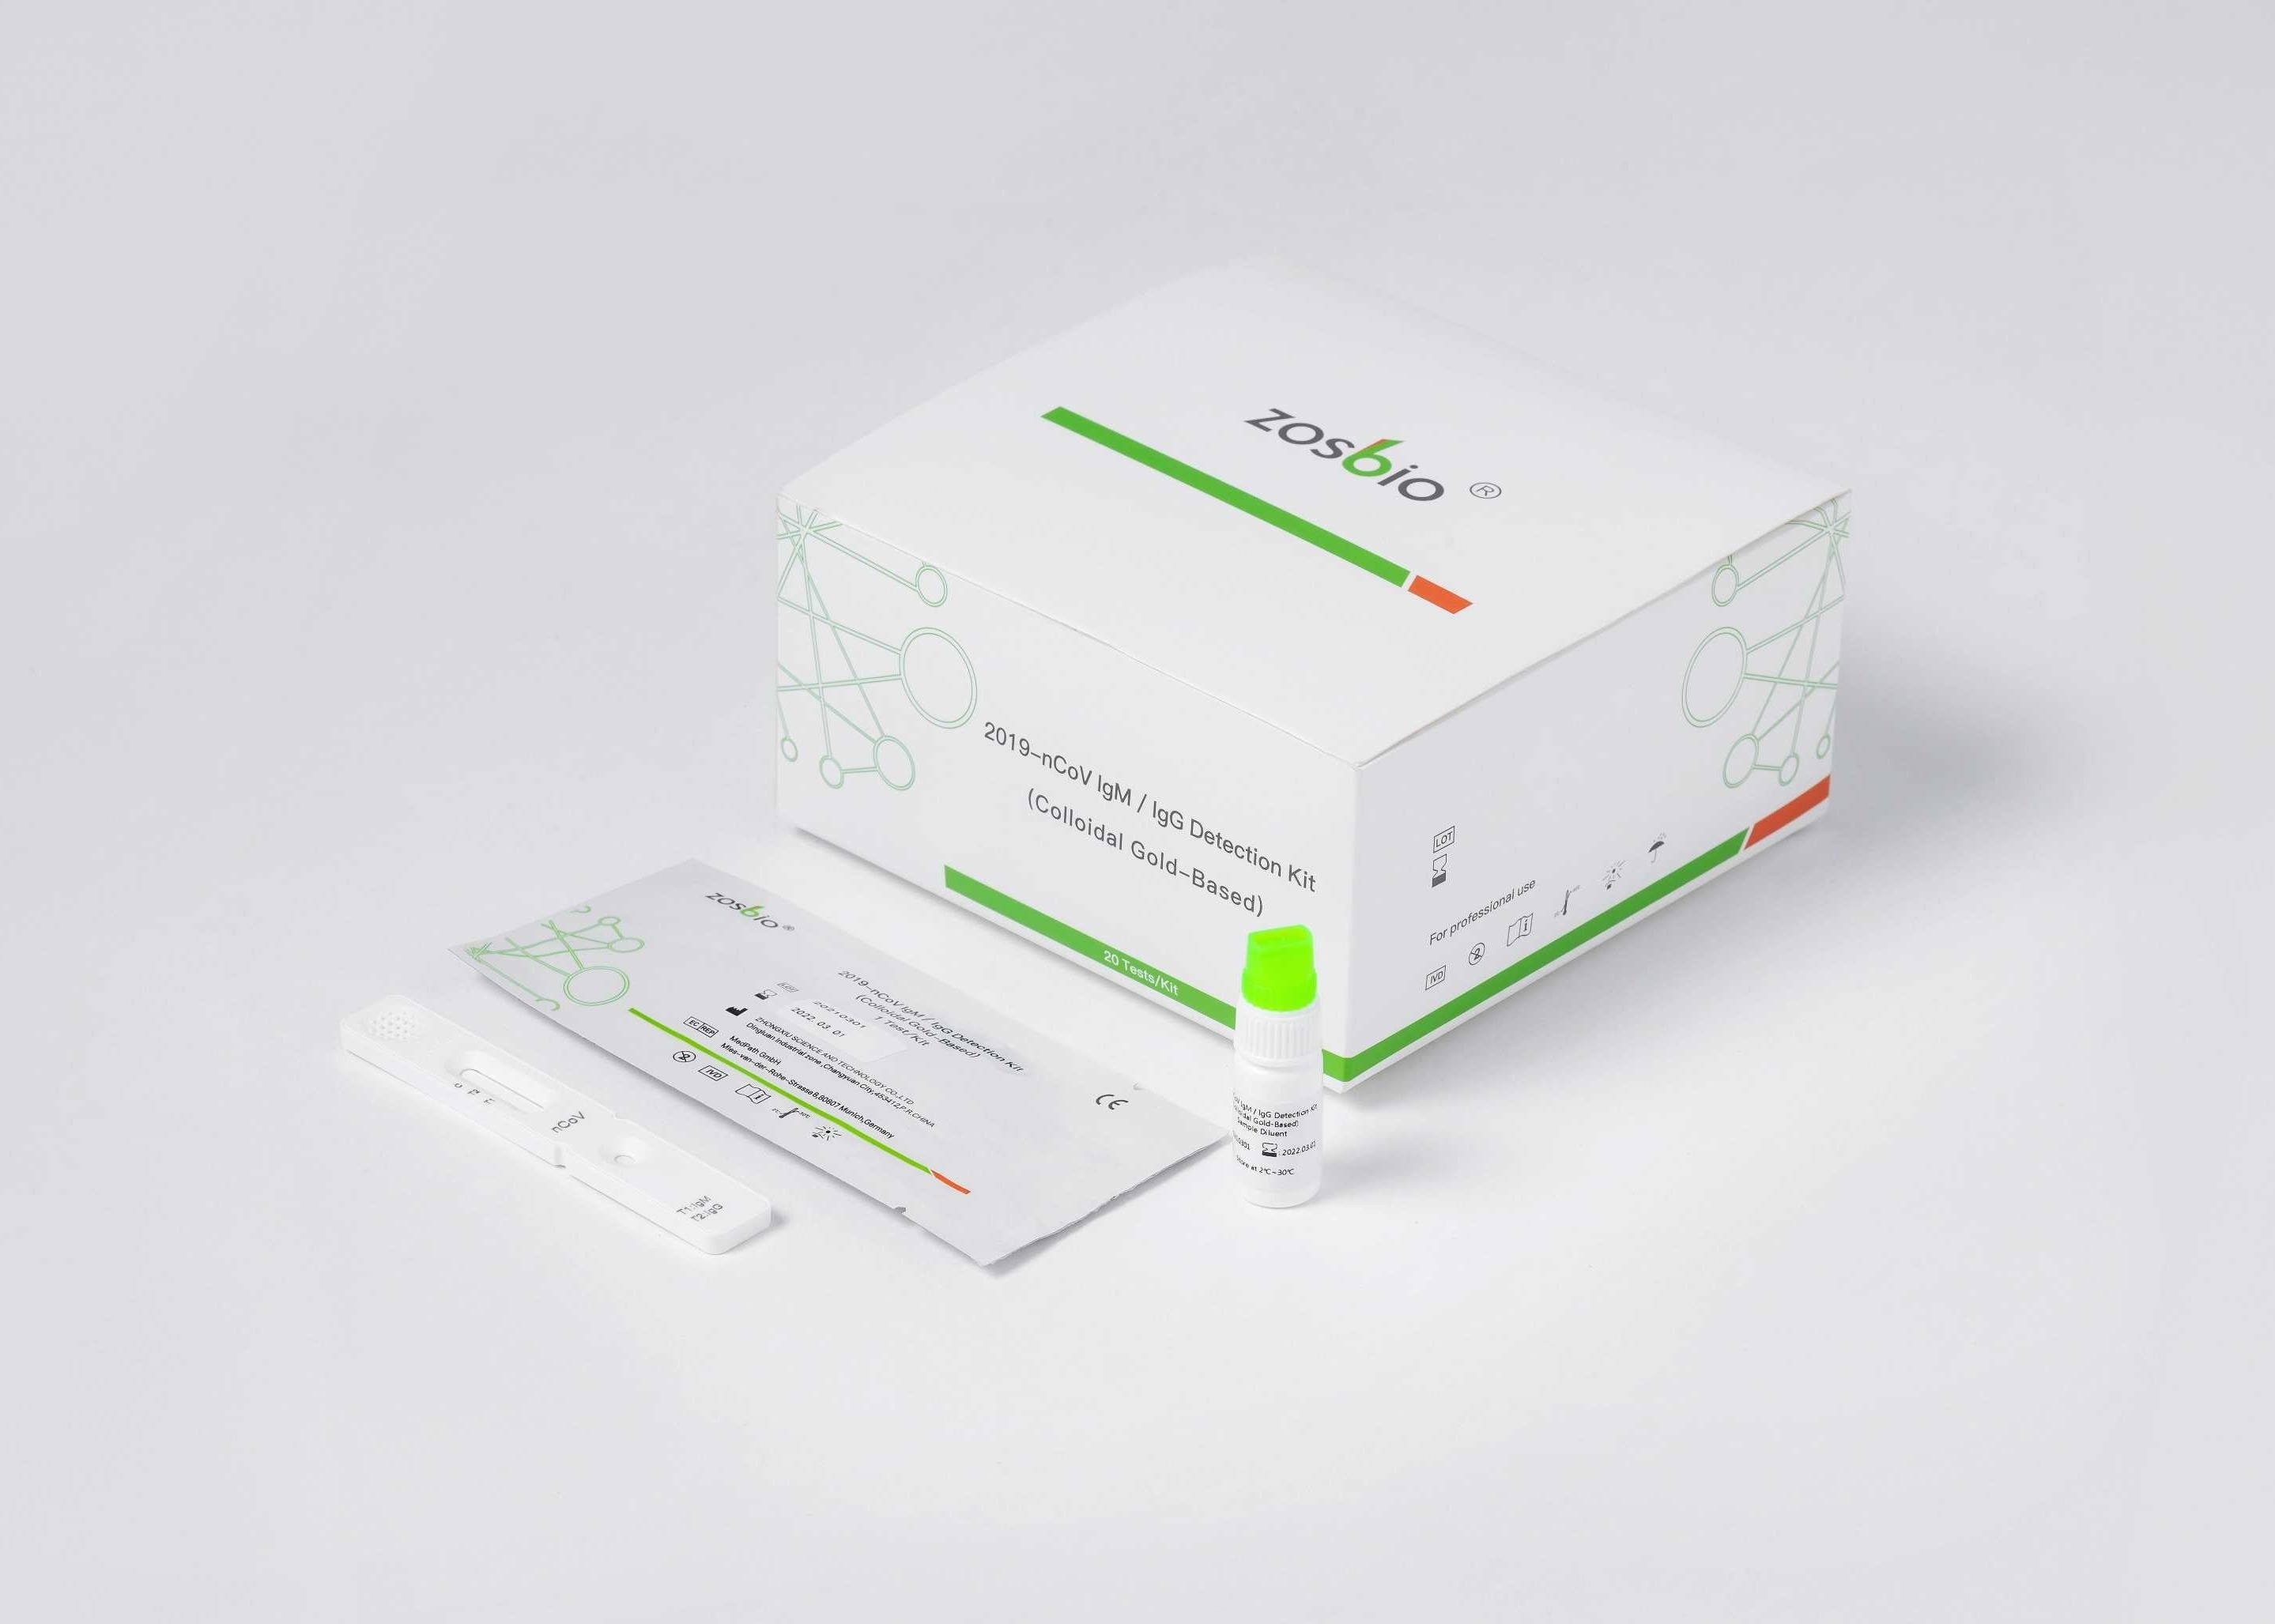 Buy cheap 2019-NCoV IgM IgG Rapid Test Serum Plasma Neutralizing Antibody Kit product